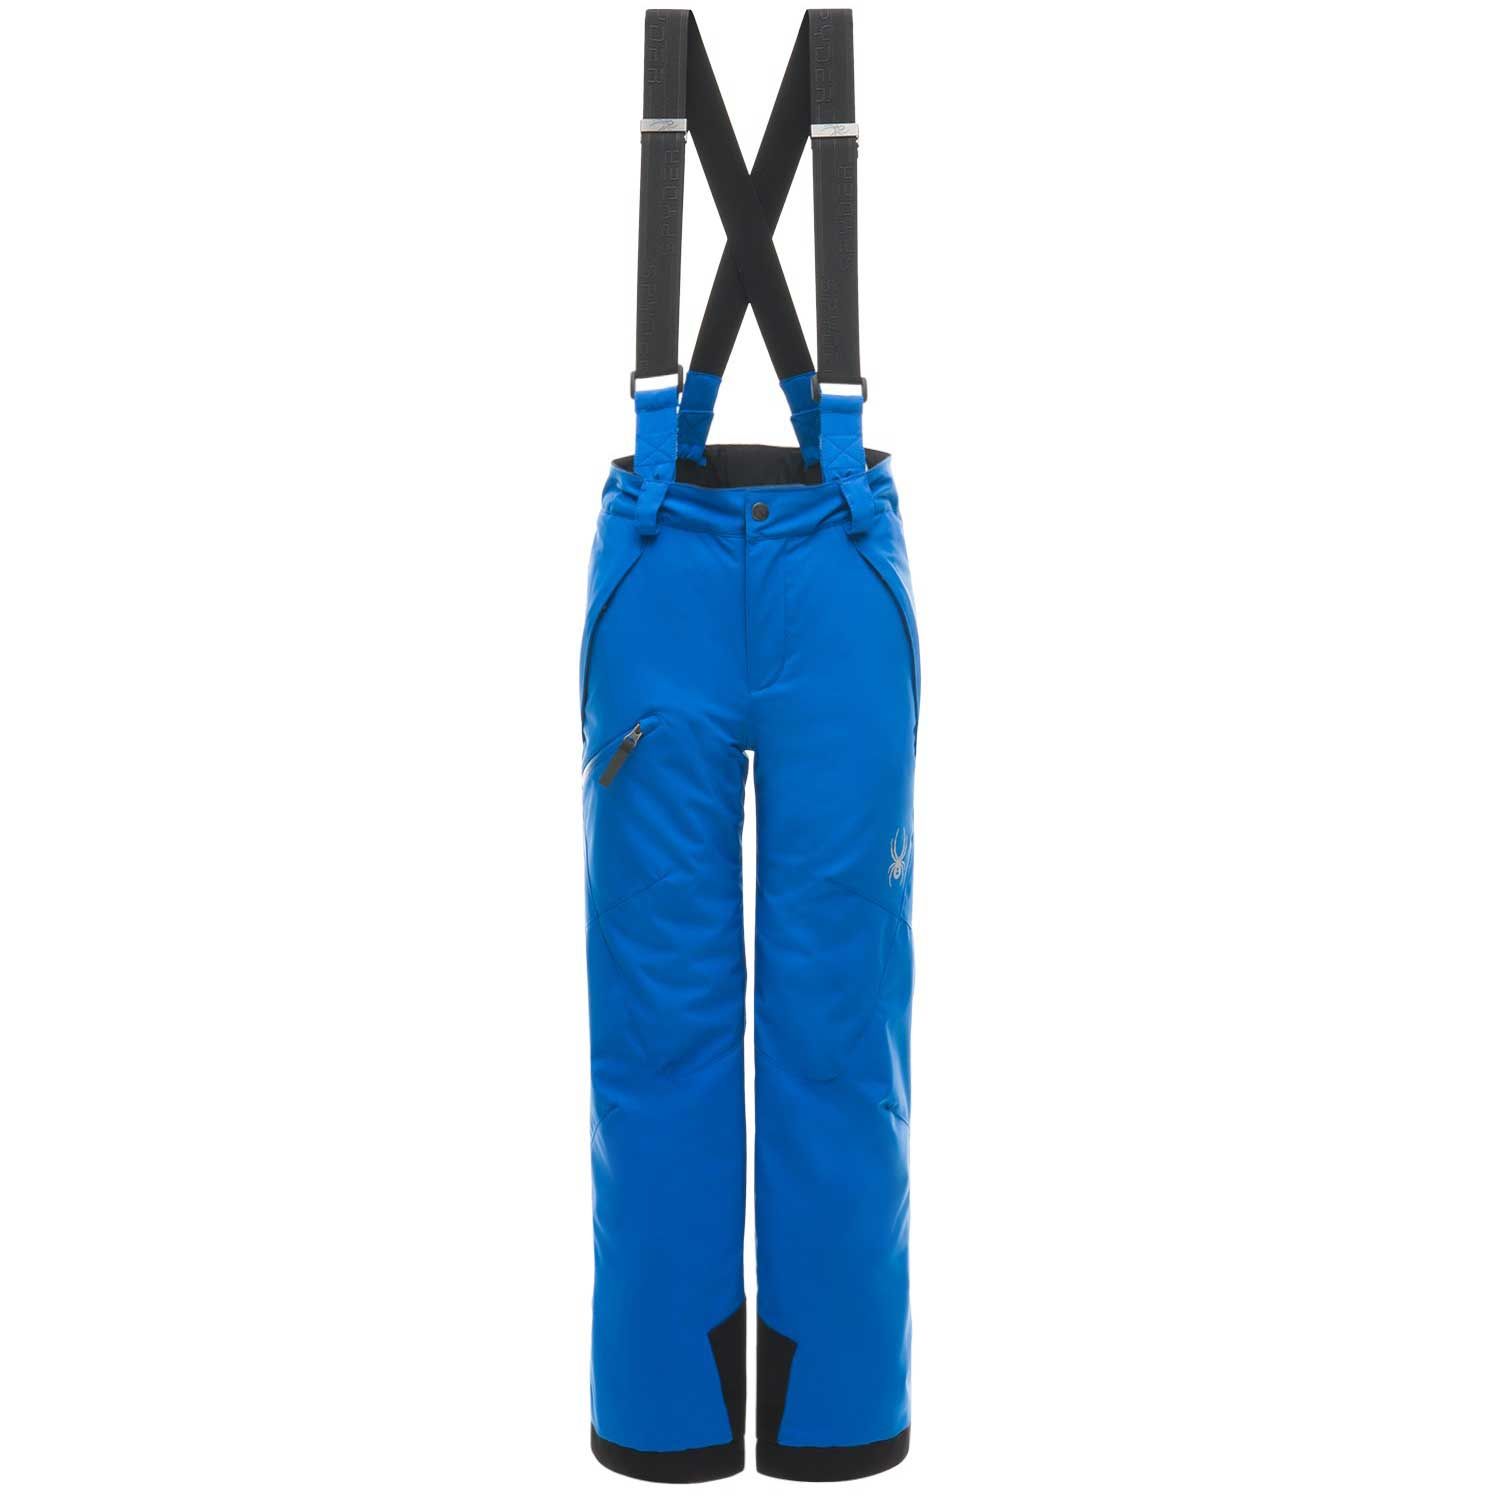 Pantalon ski garçon K Boy's Propulsion Pant - Bleu